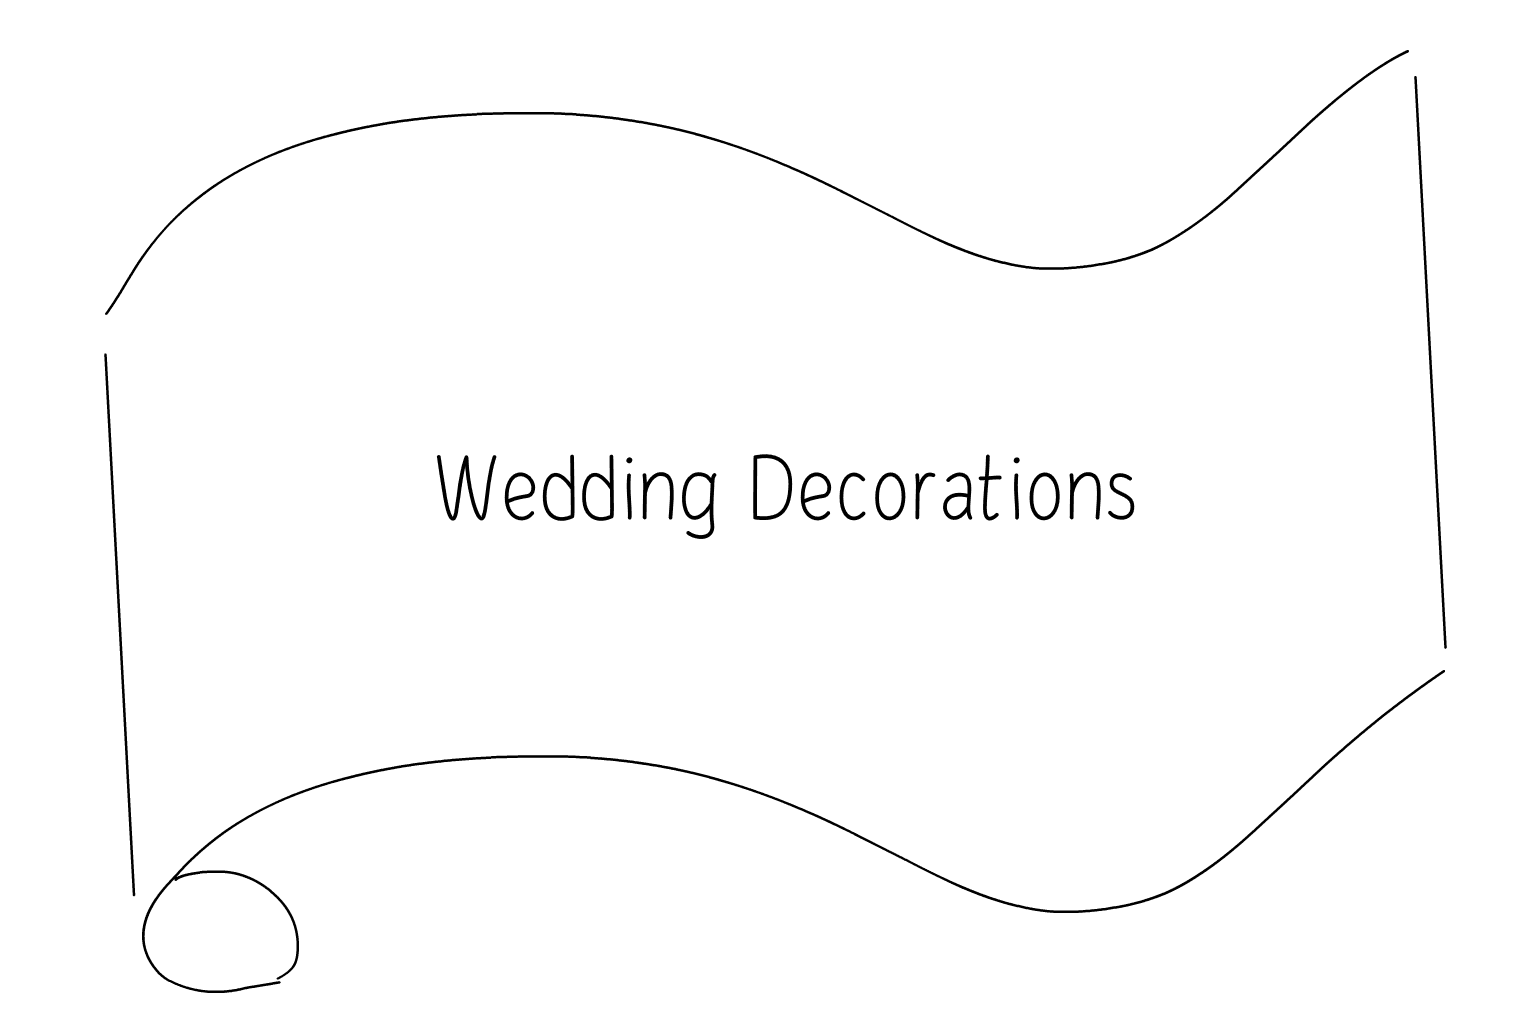 Illustration of Wedding Decorations & Lighting